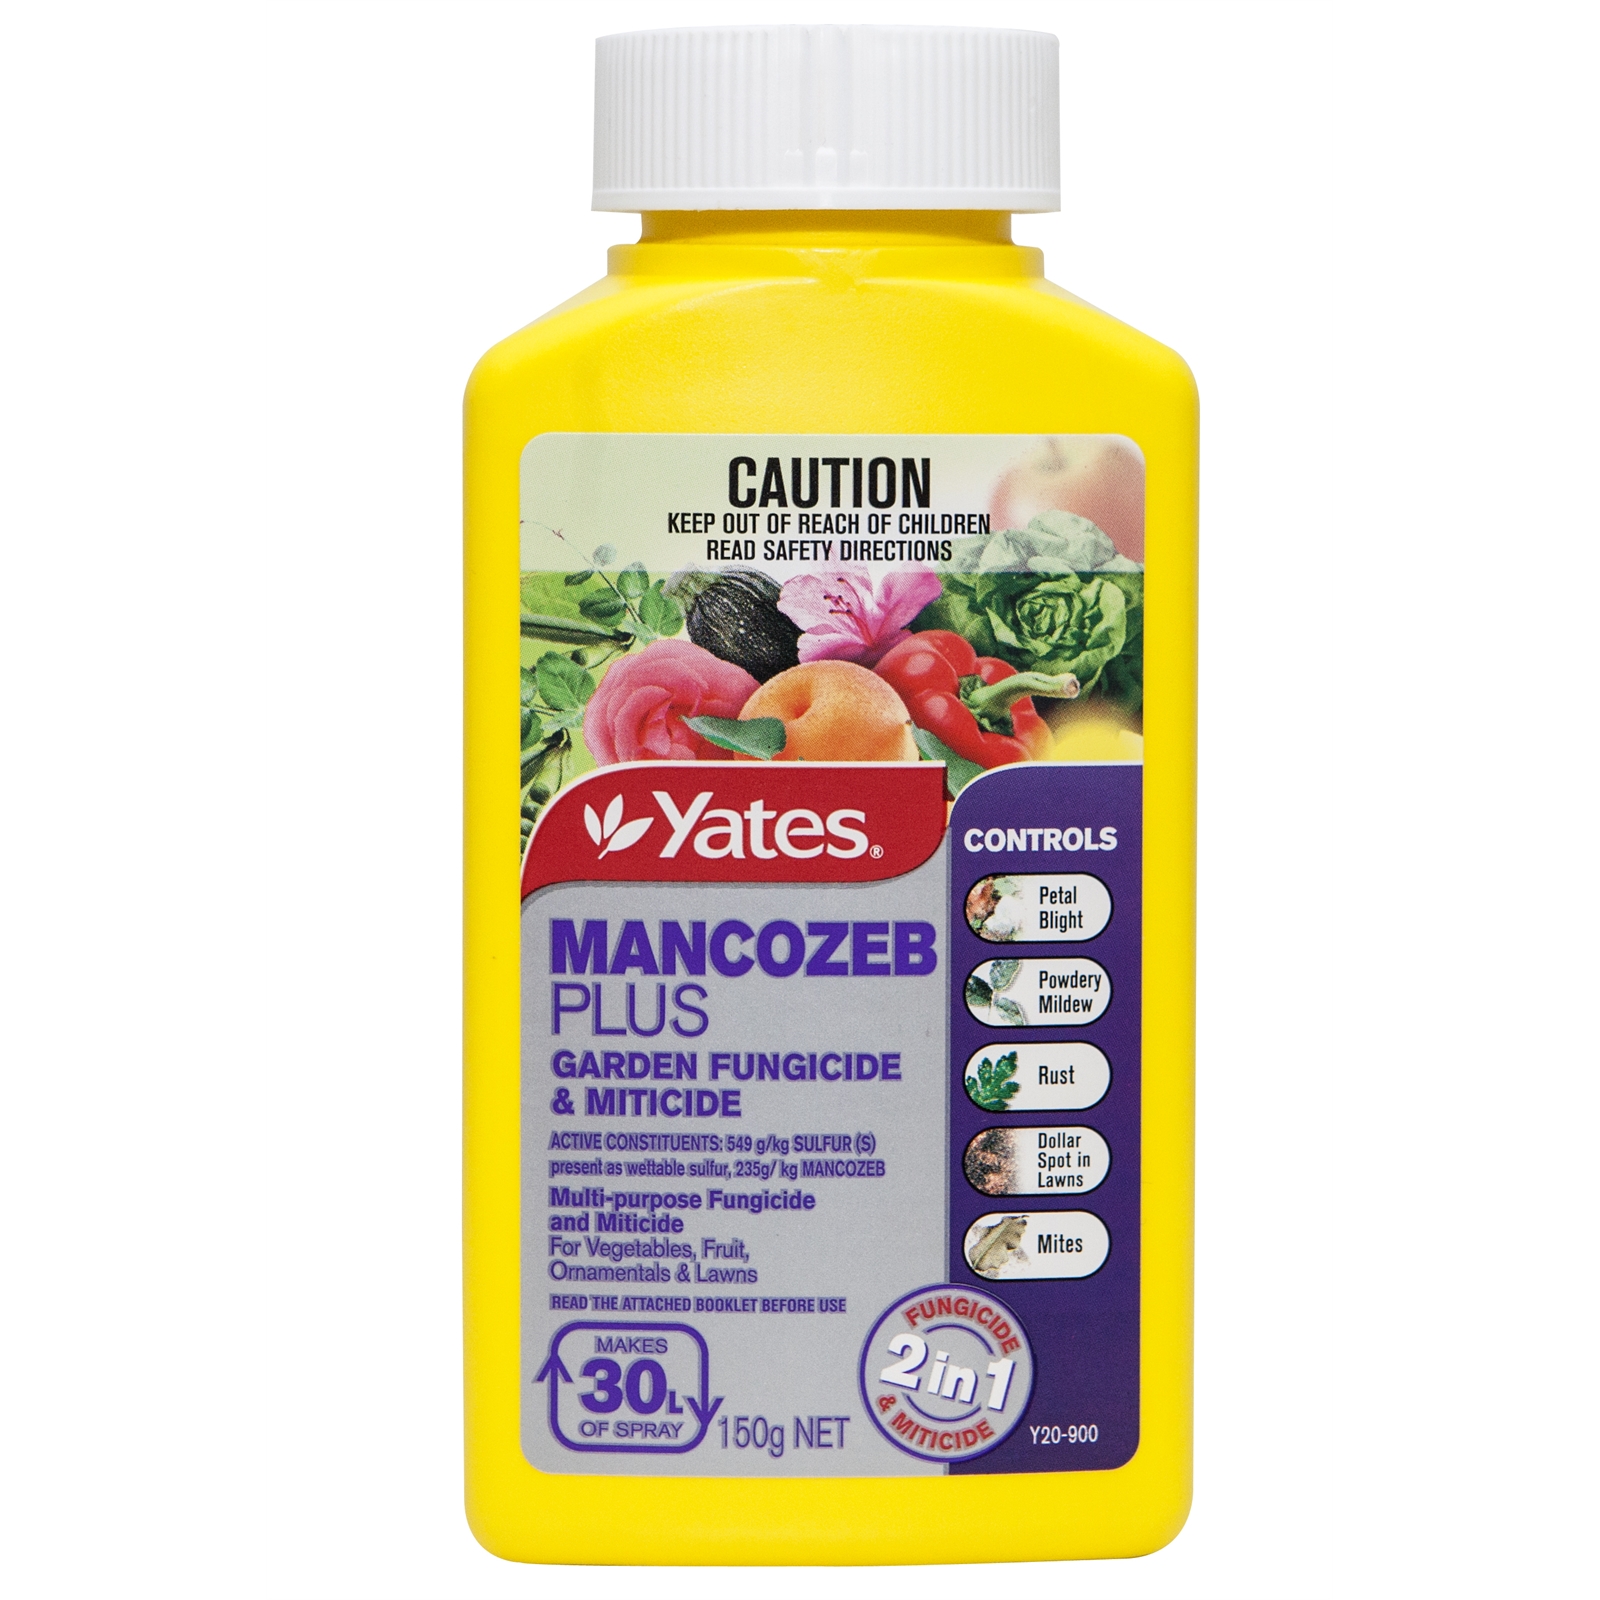 Yates 150g Mancozeb Plus Garden Fungicide and Miticide